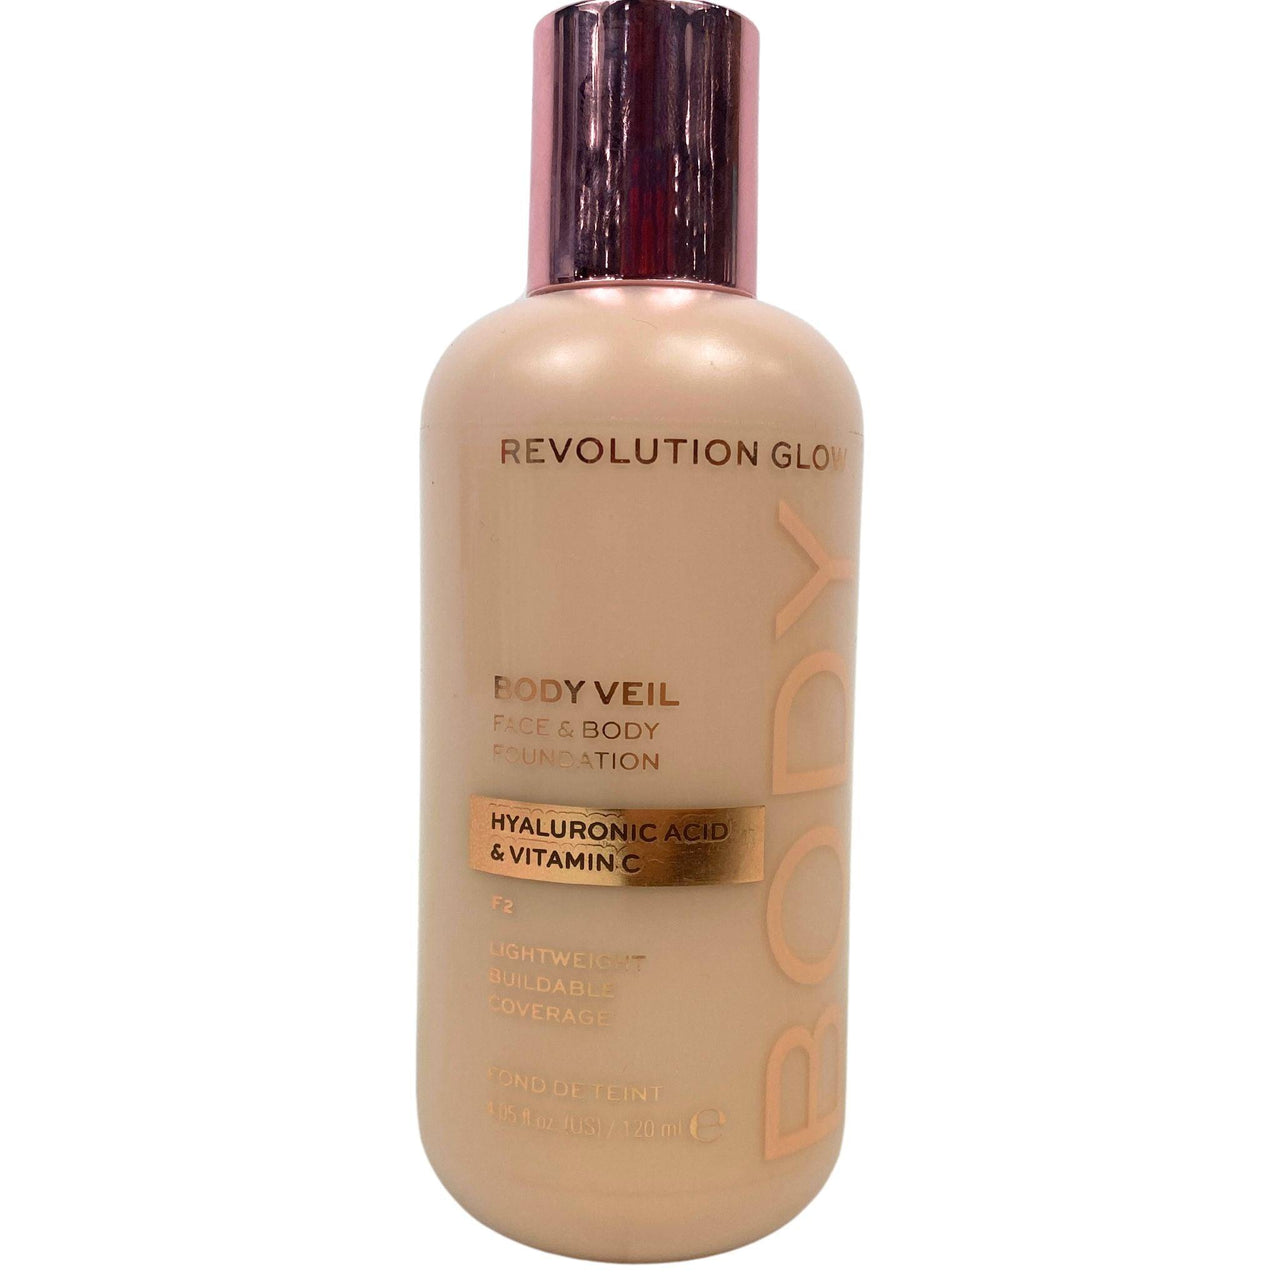 Revolution Glow Body Veil Face & Body Foundation F2 Lightweight (25 Pcs Lot) - Discount Wholesalers Inc